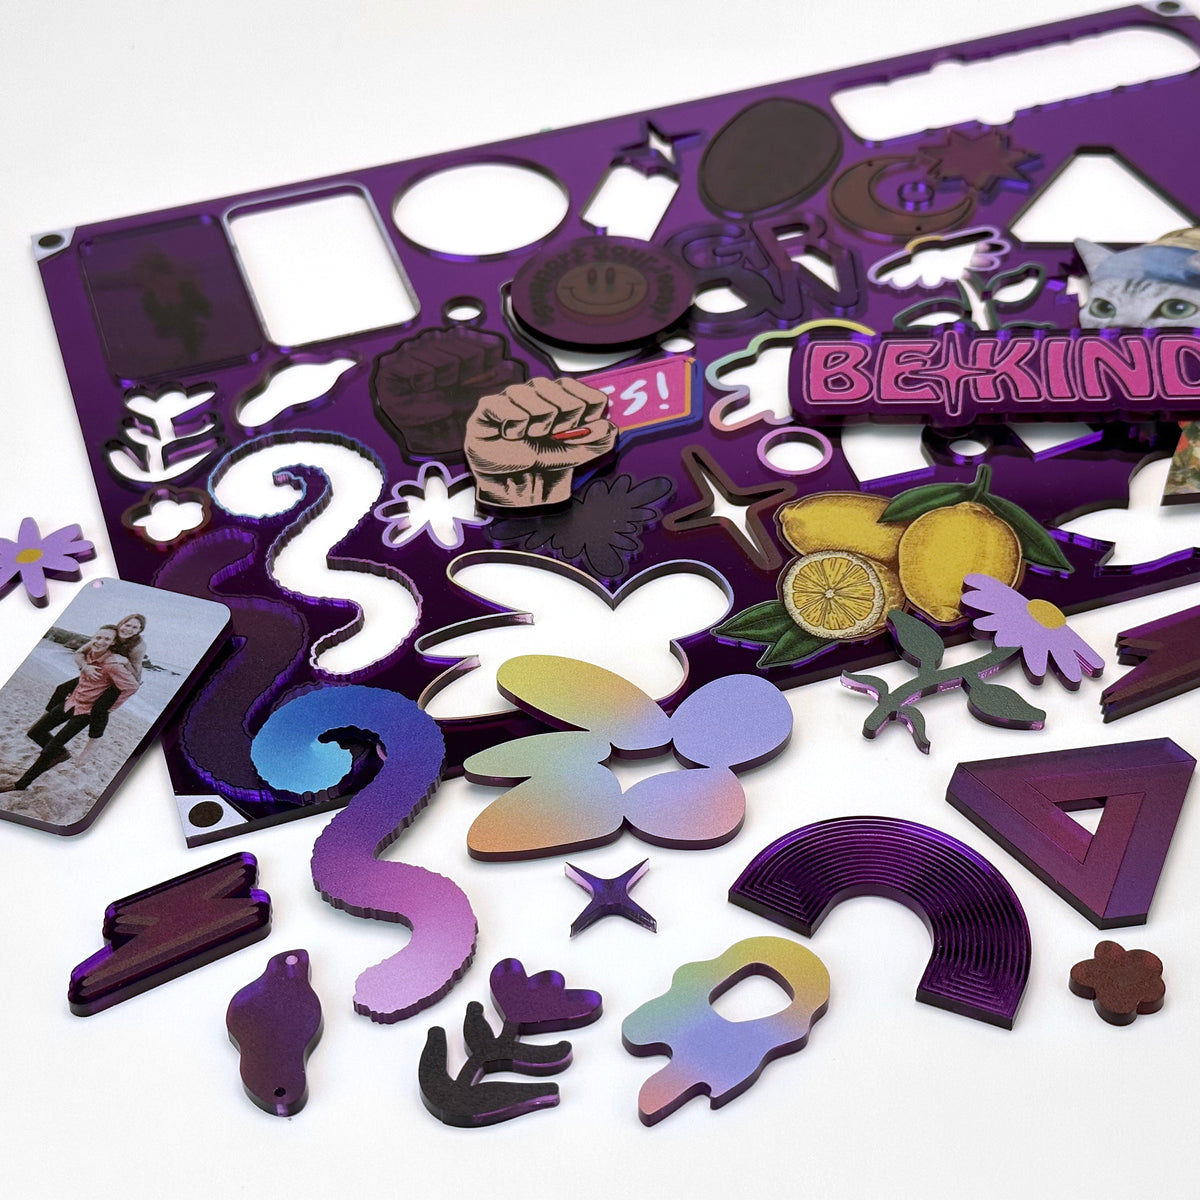 Mirror Purple Acrylic with laser cutting & printing - 300x200mm